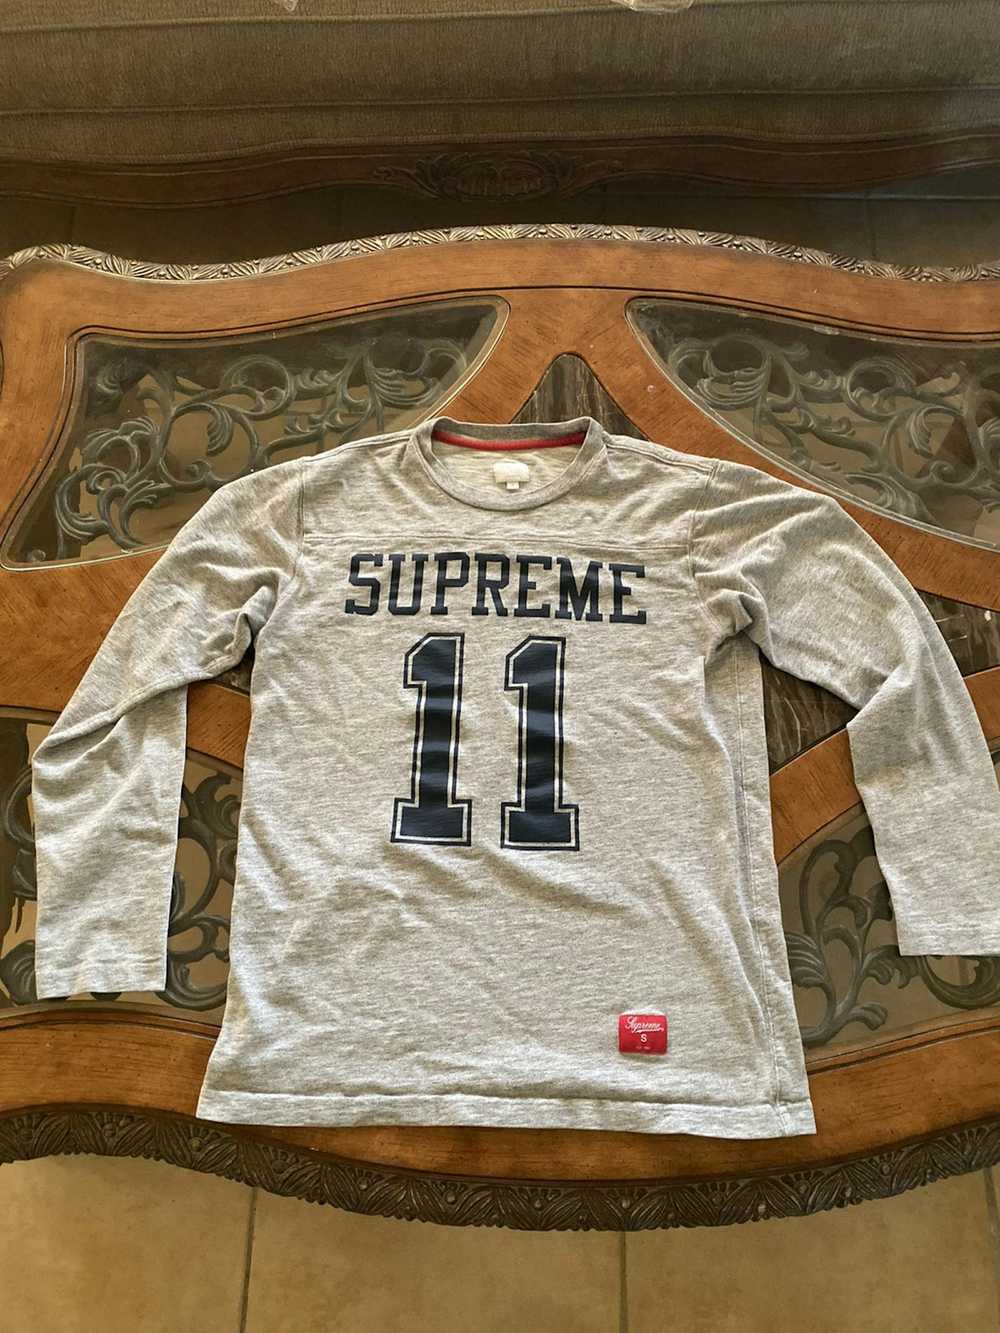 Supreme Vintage 90s Supreme 11 Sweatshirt Jersey - image 1